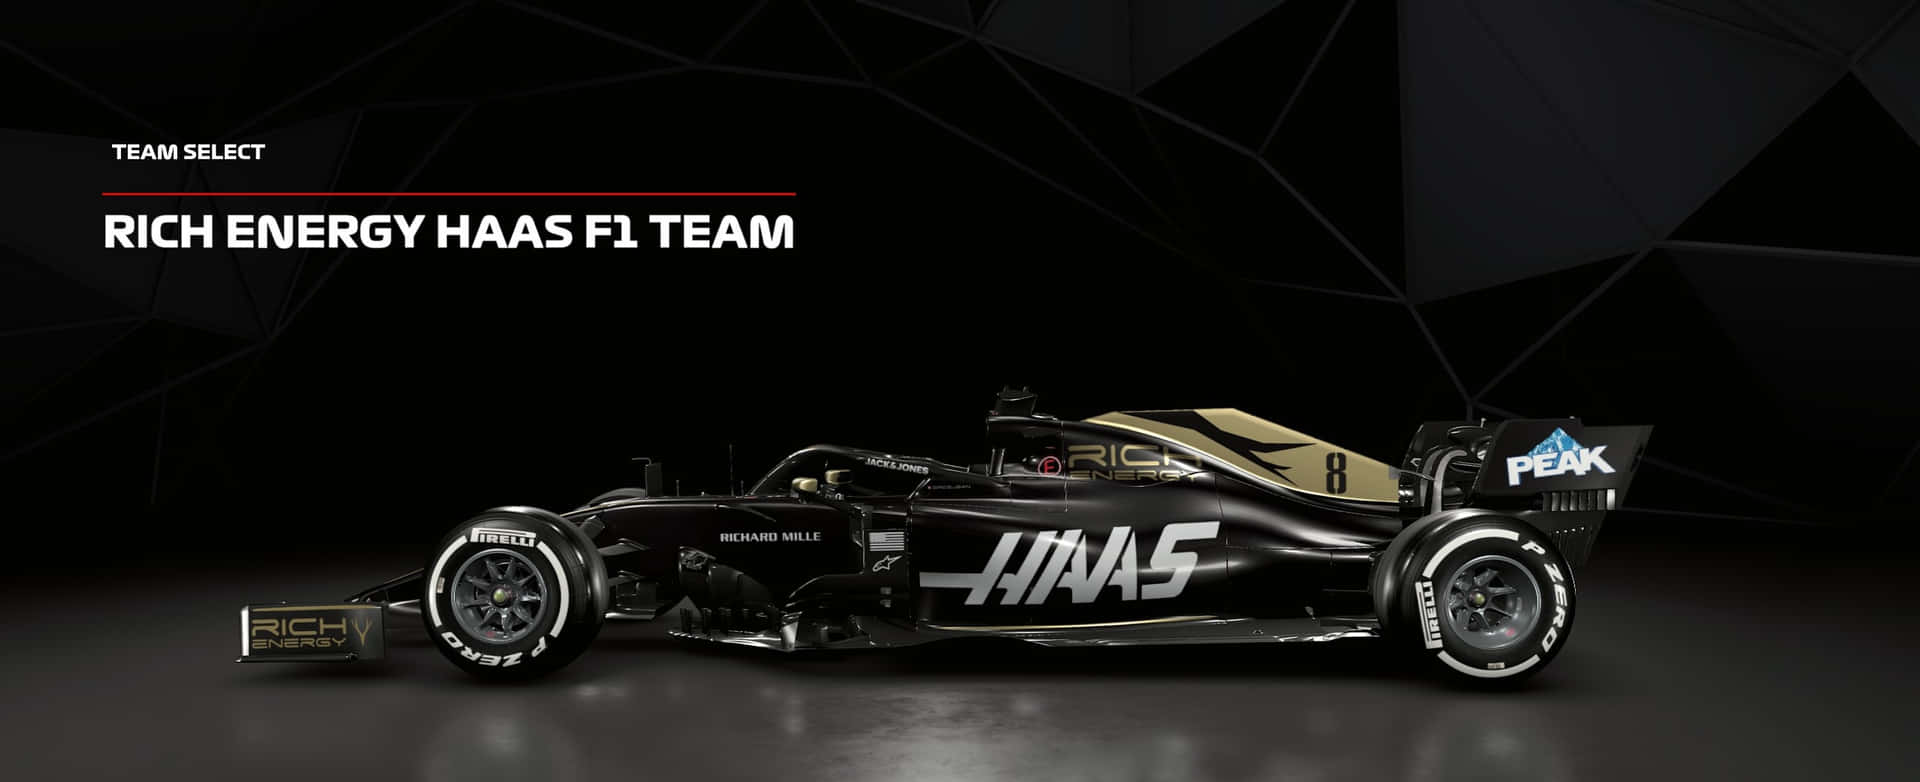 A Black Car With The Words Rich Energy Haas Team